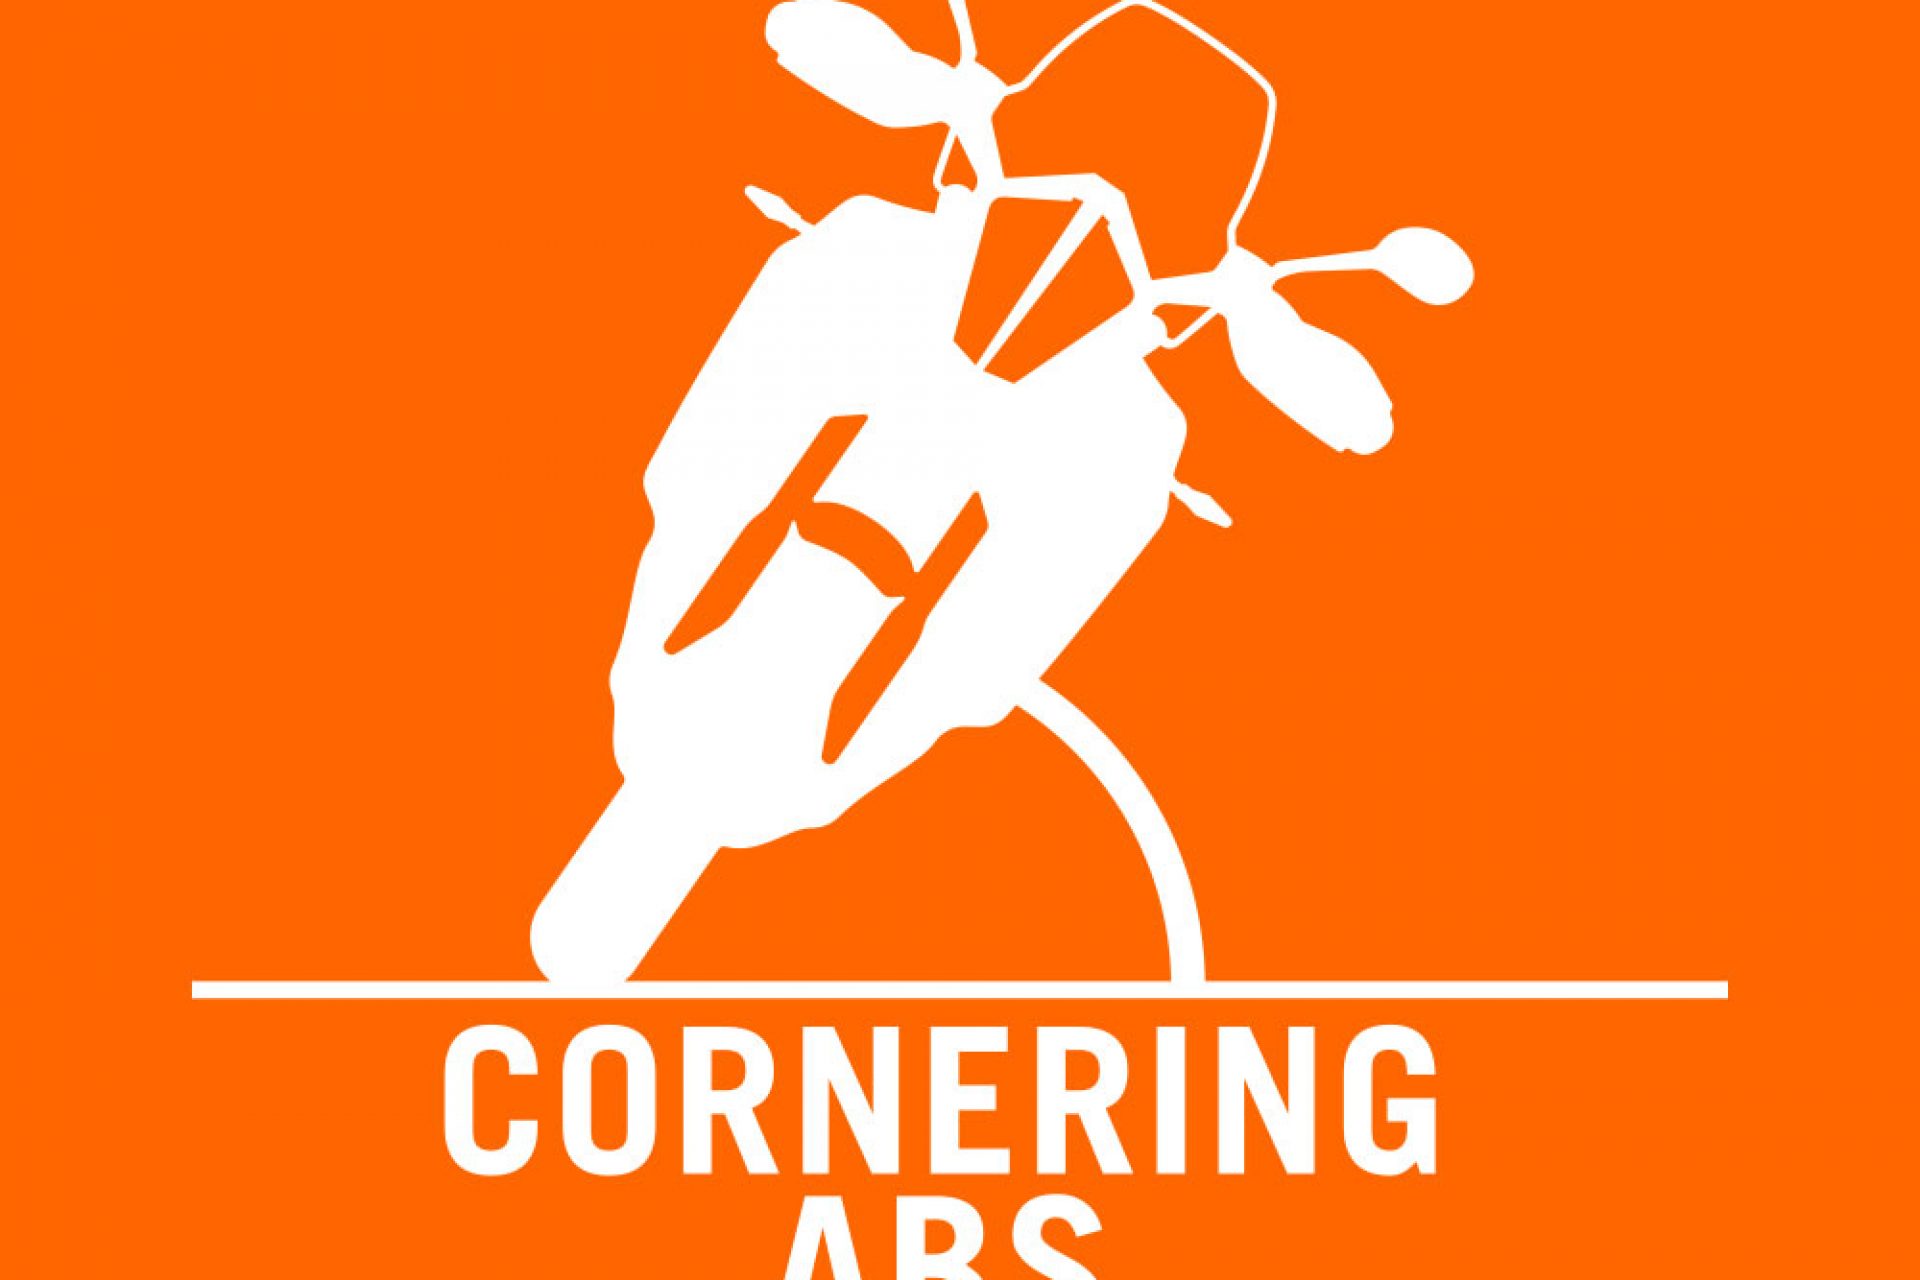 Cornering ABS